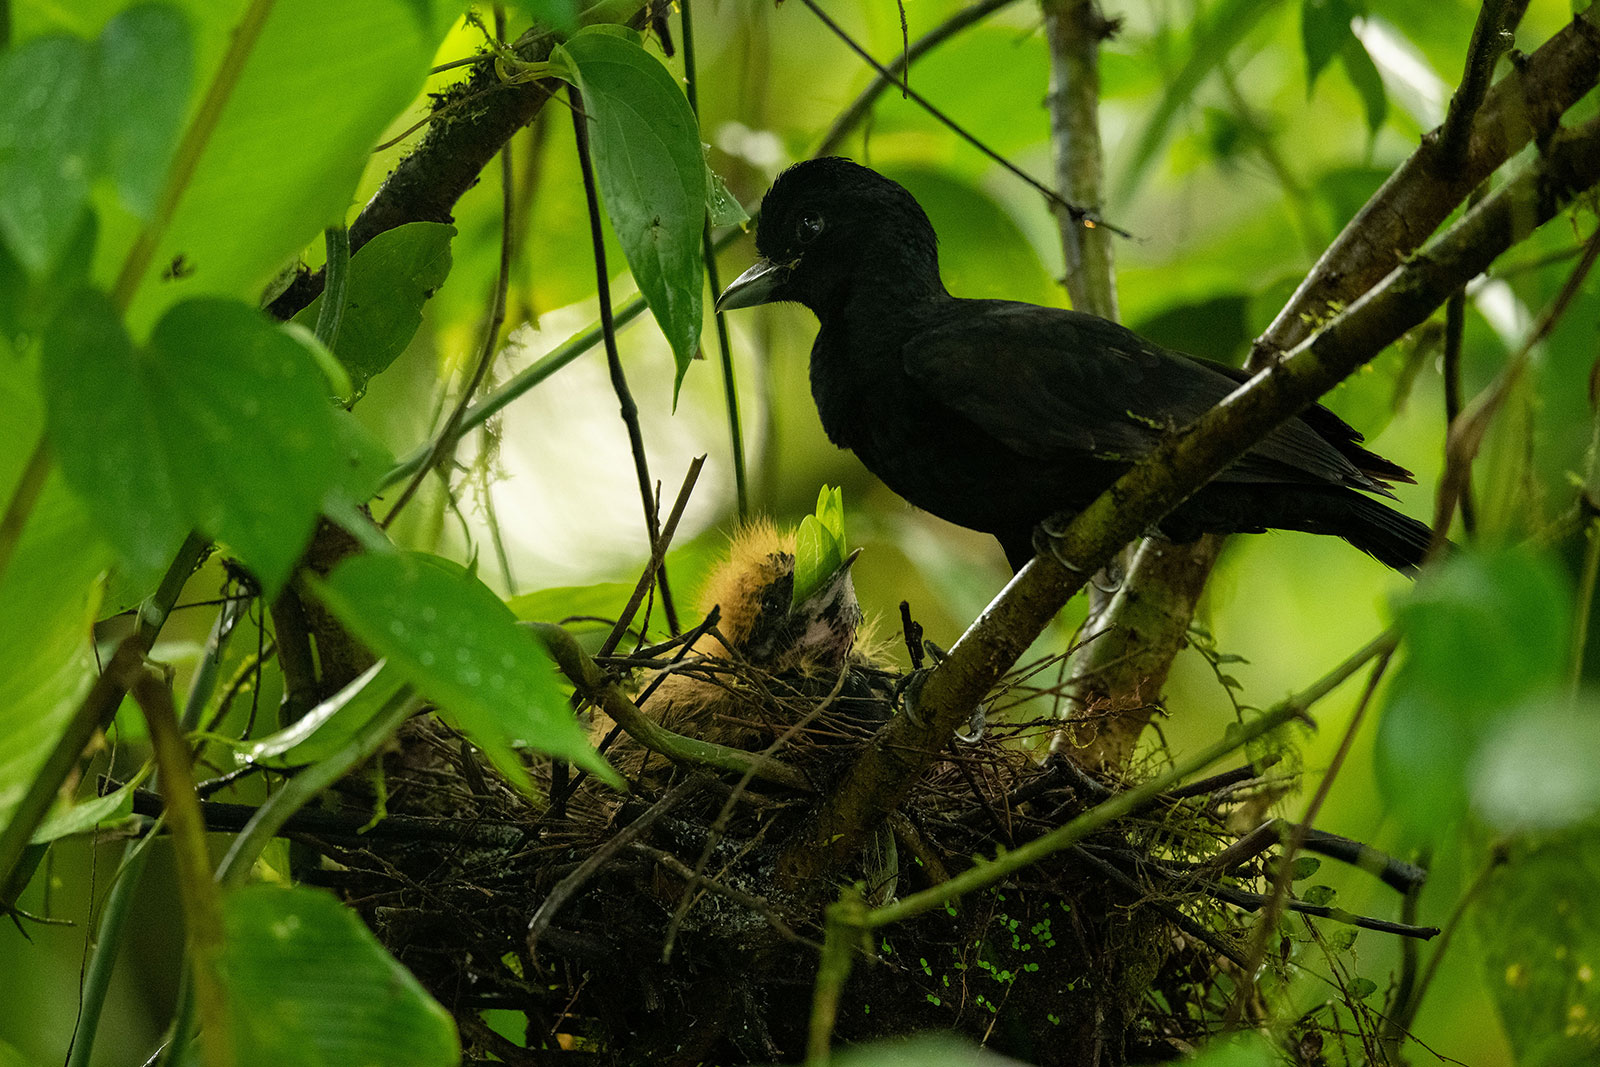 A black bird protecting its nest